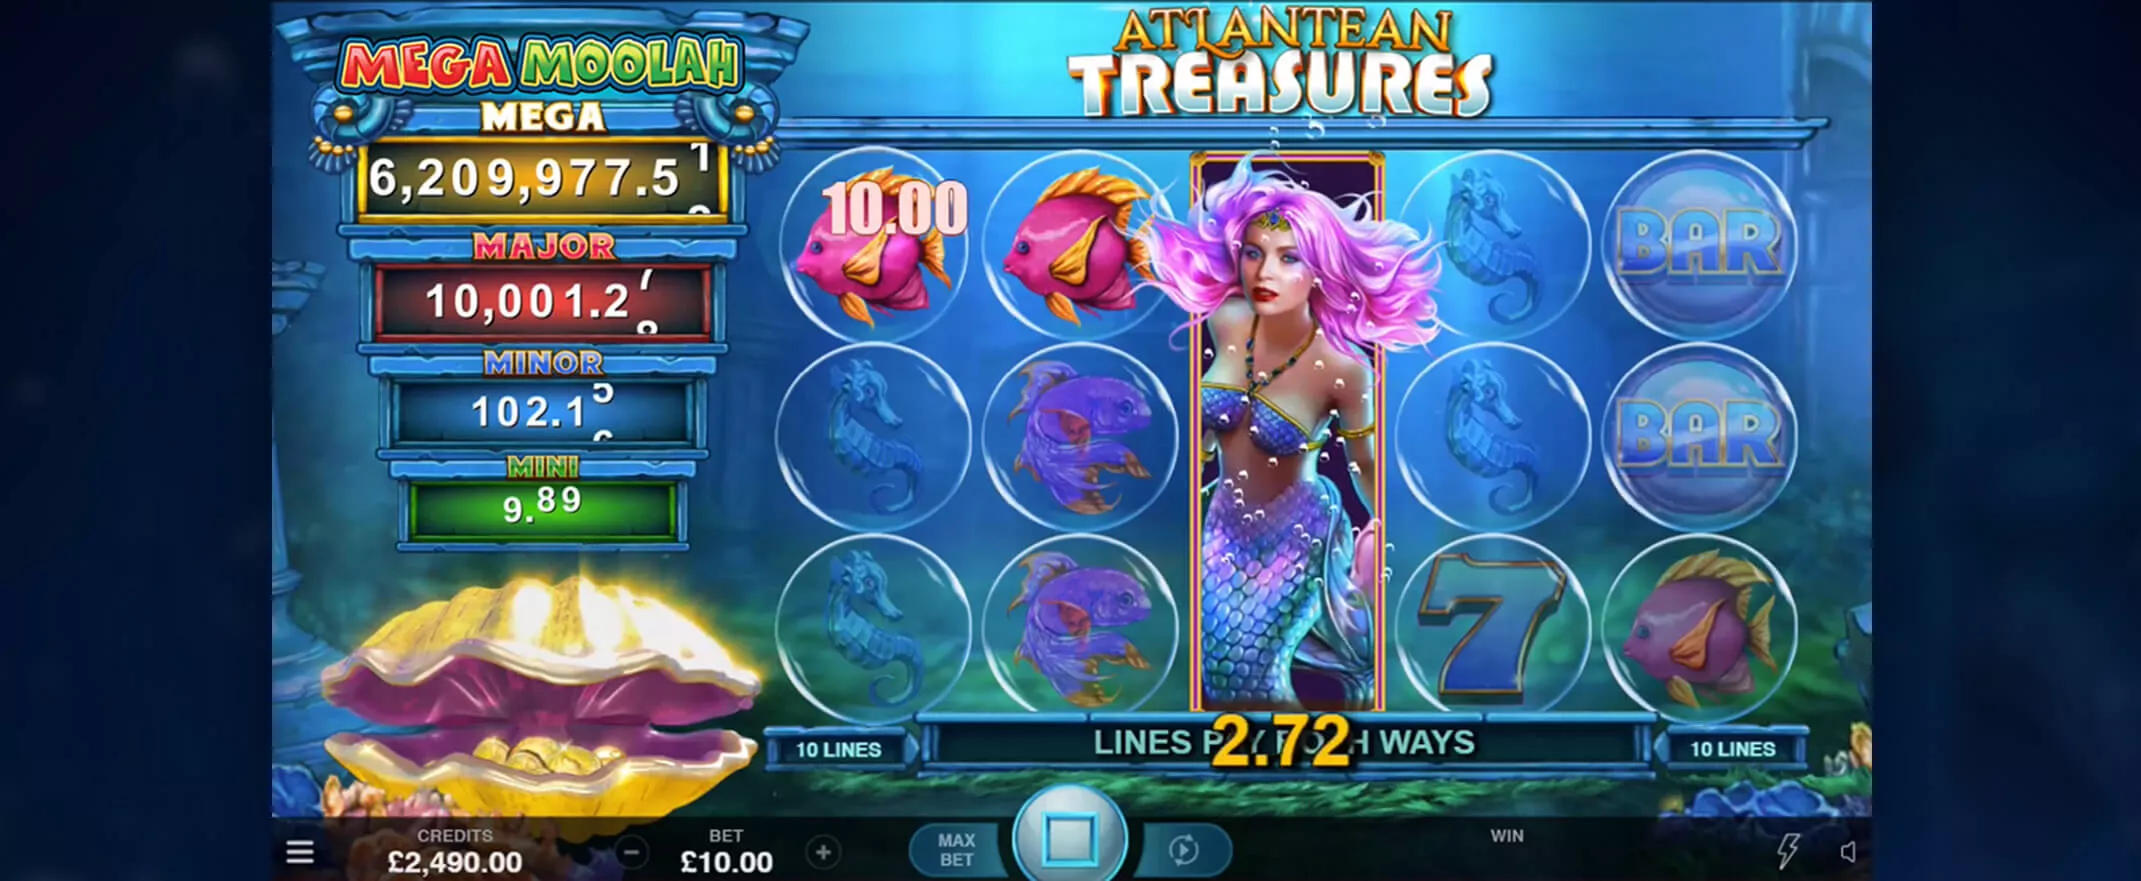 Atlantean Treasures Mega Moolah peliautomaatti Microgamingilta - kuva pelin keloista